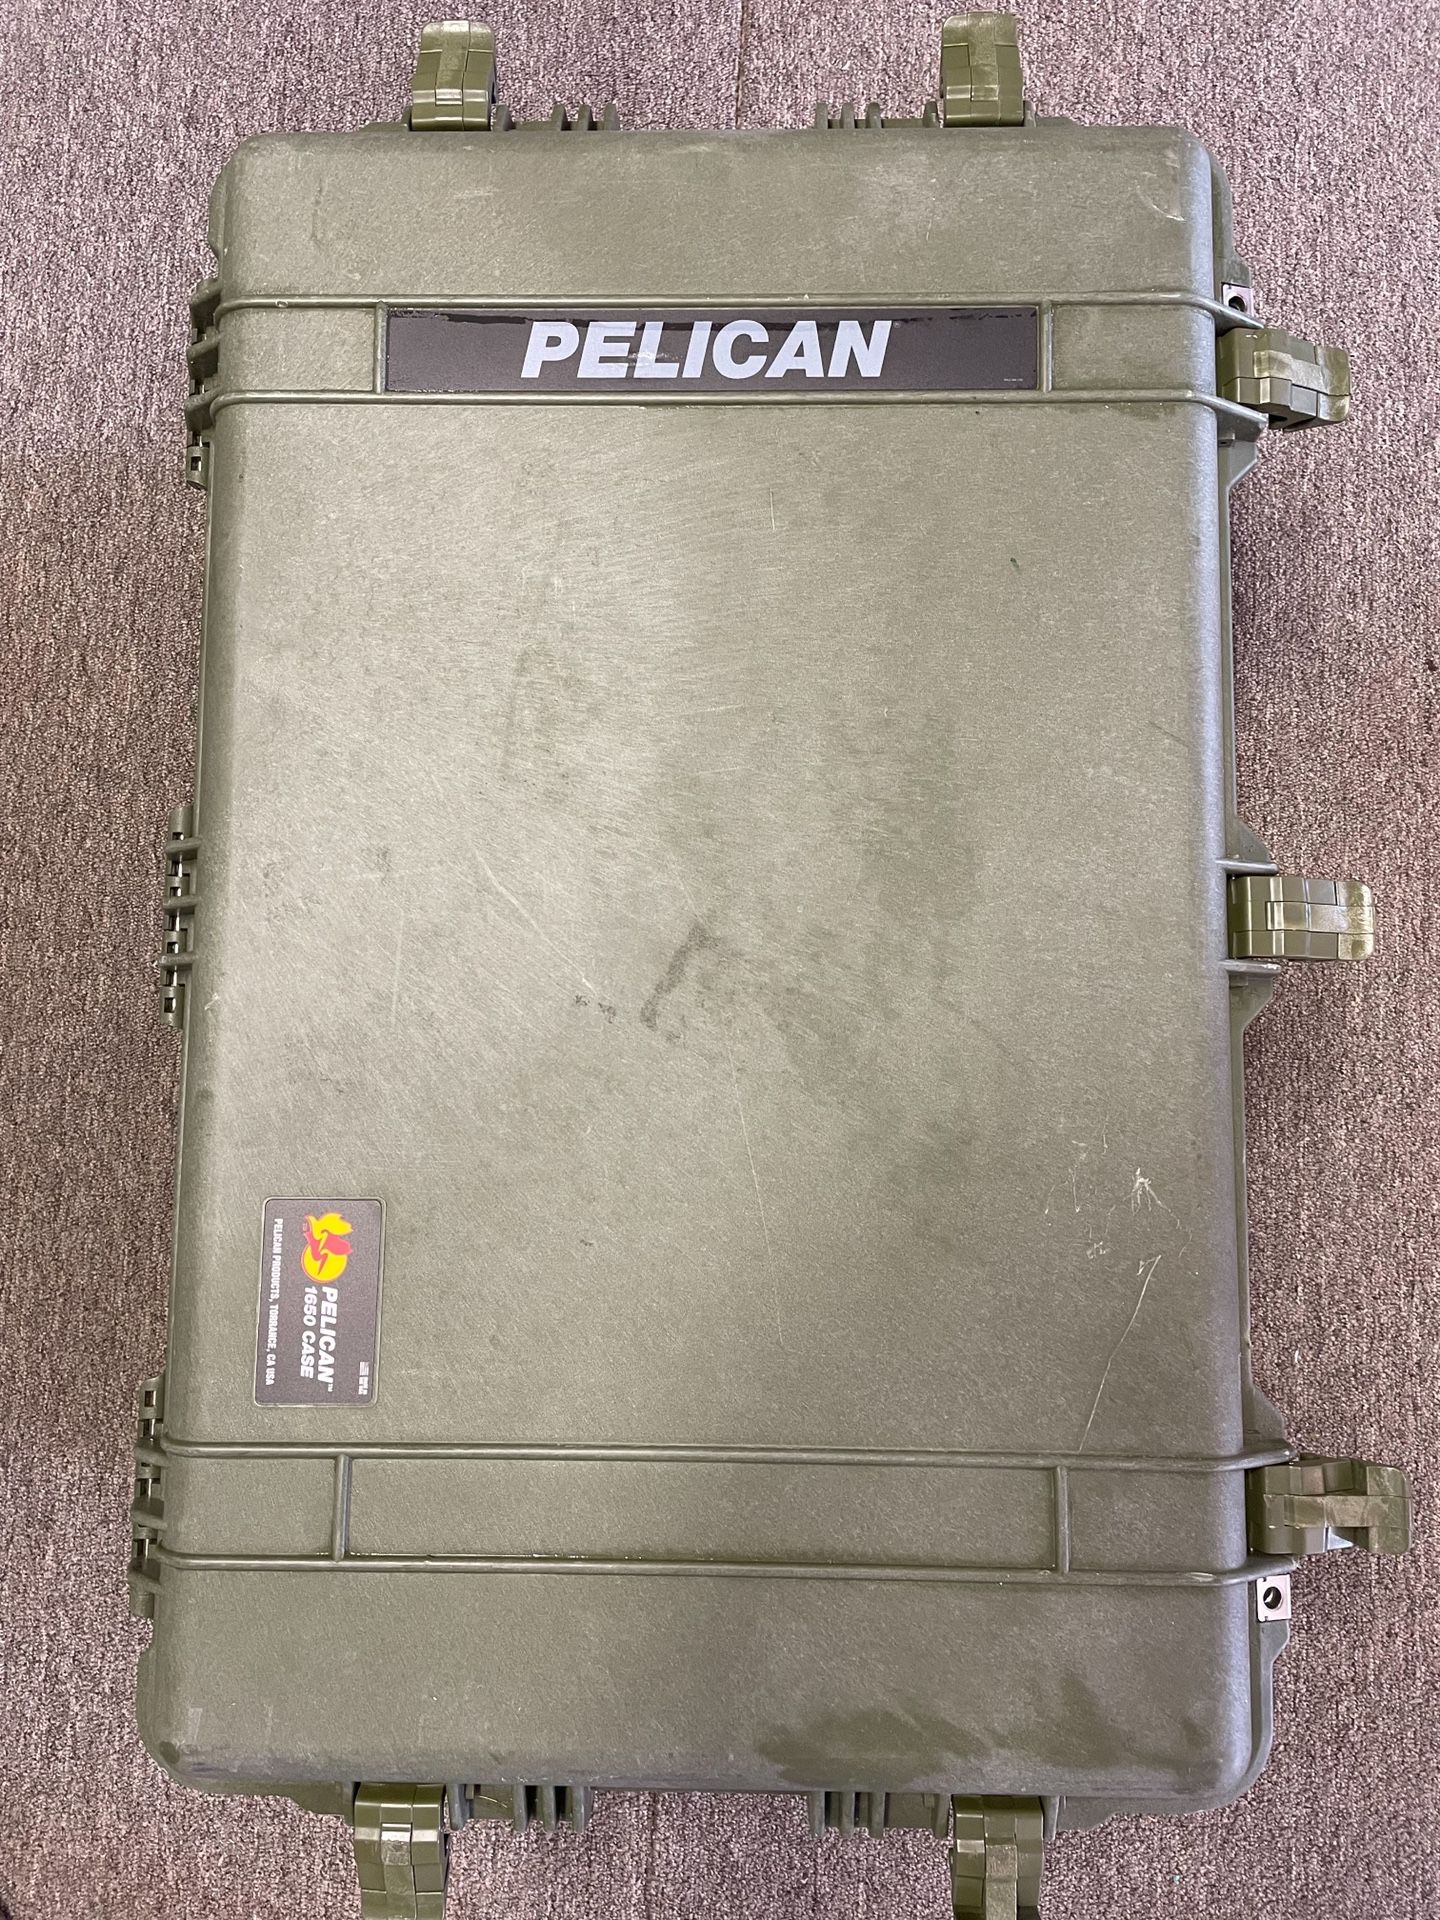 Pelican Box